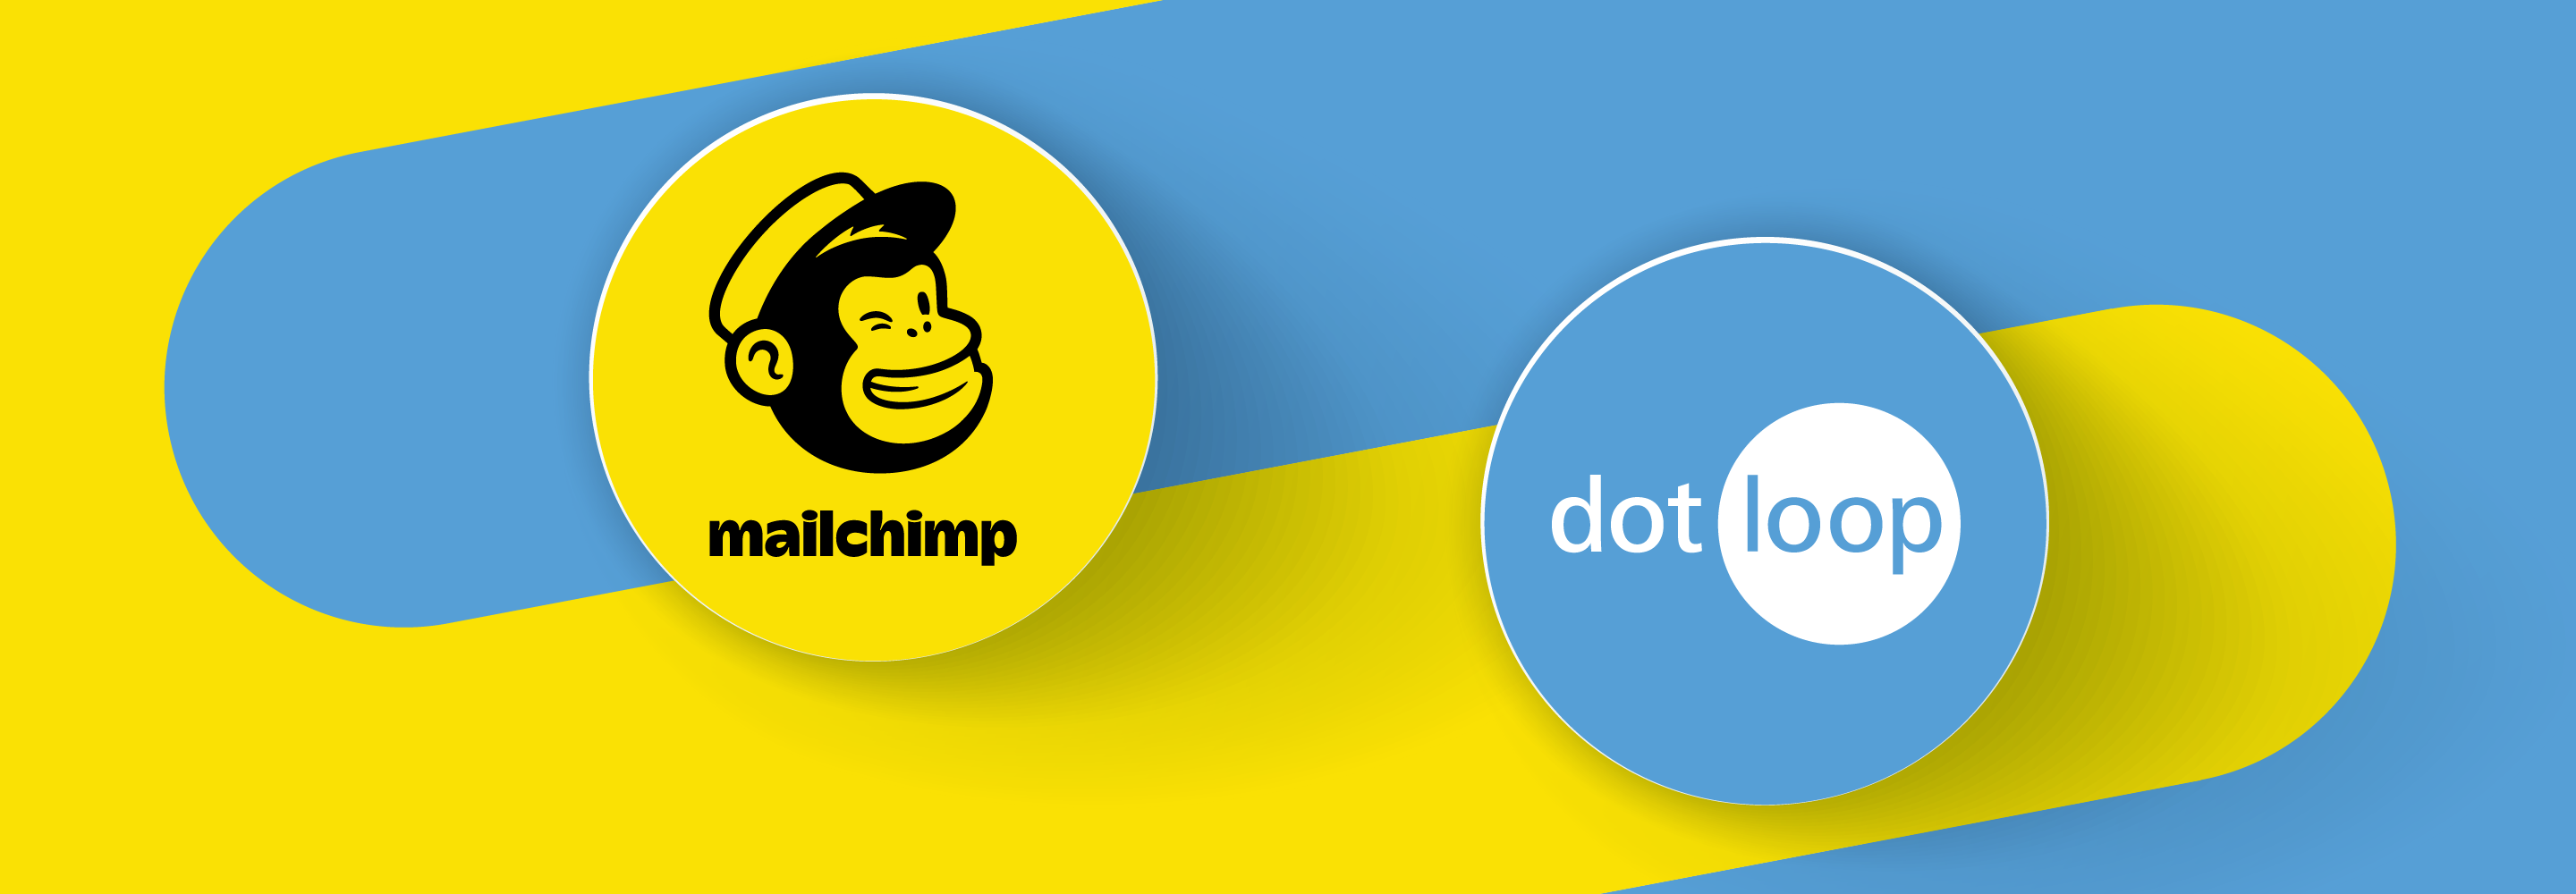 dotloop and Mailchimp logos